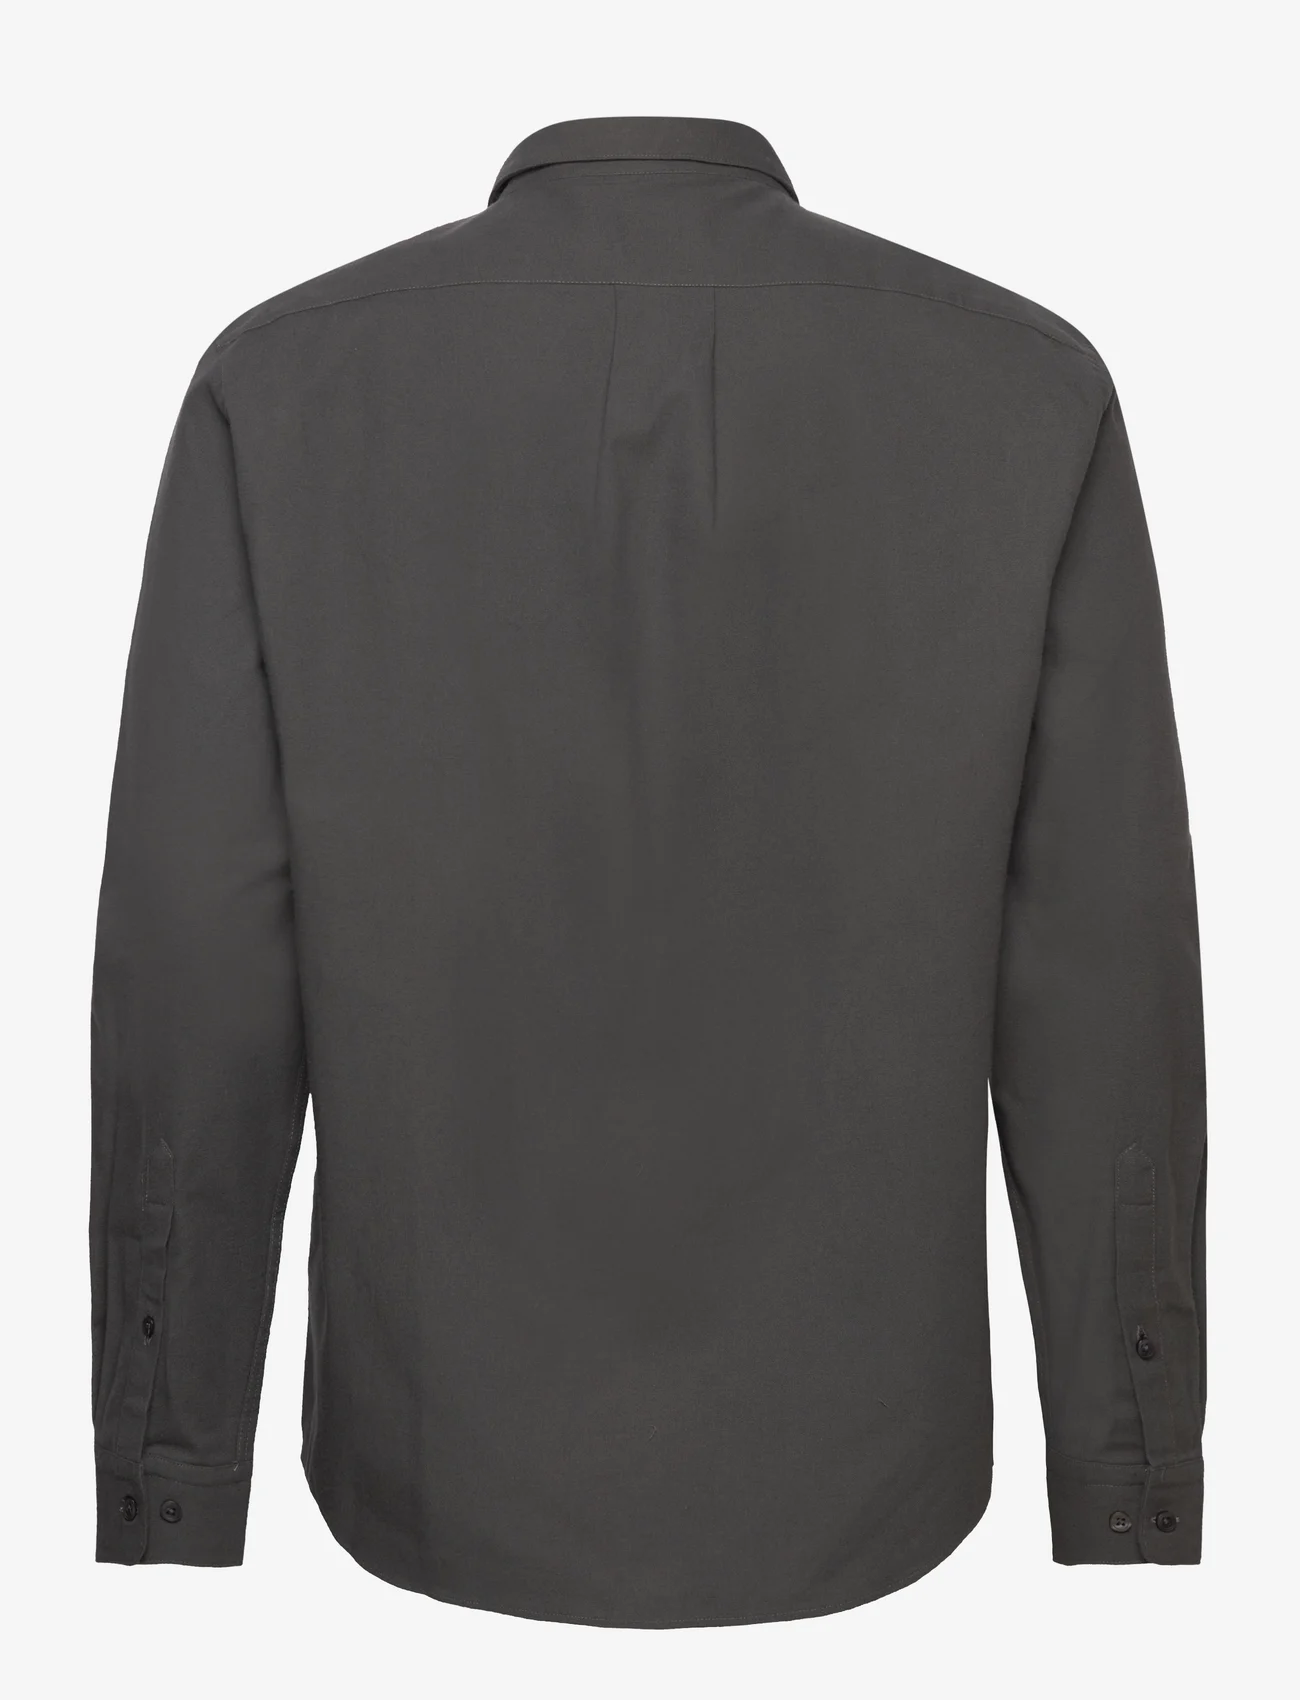 Mads Nørgaard - Cotton Flannel Malte Shirt - basic skjorter - asphalt - 1